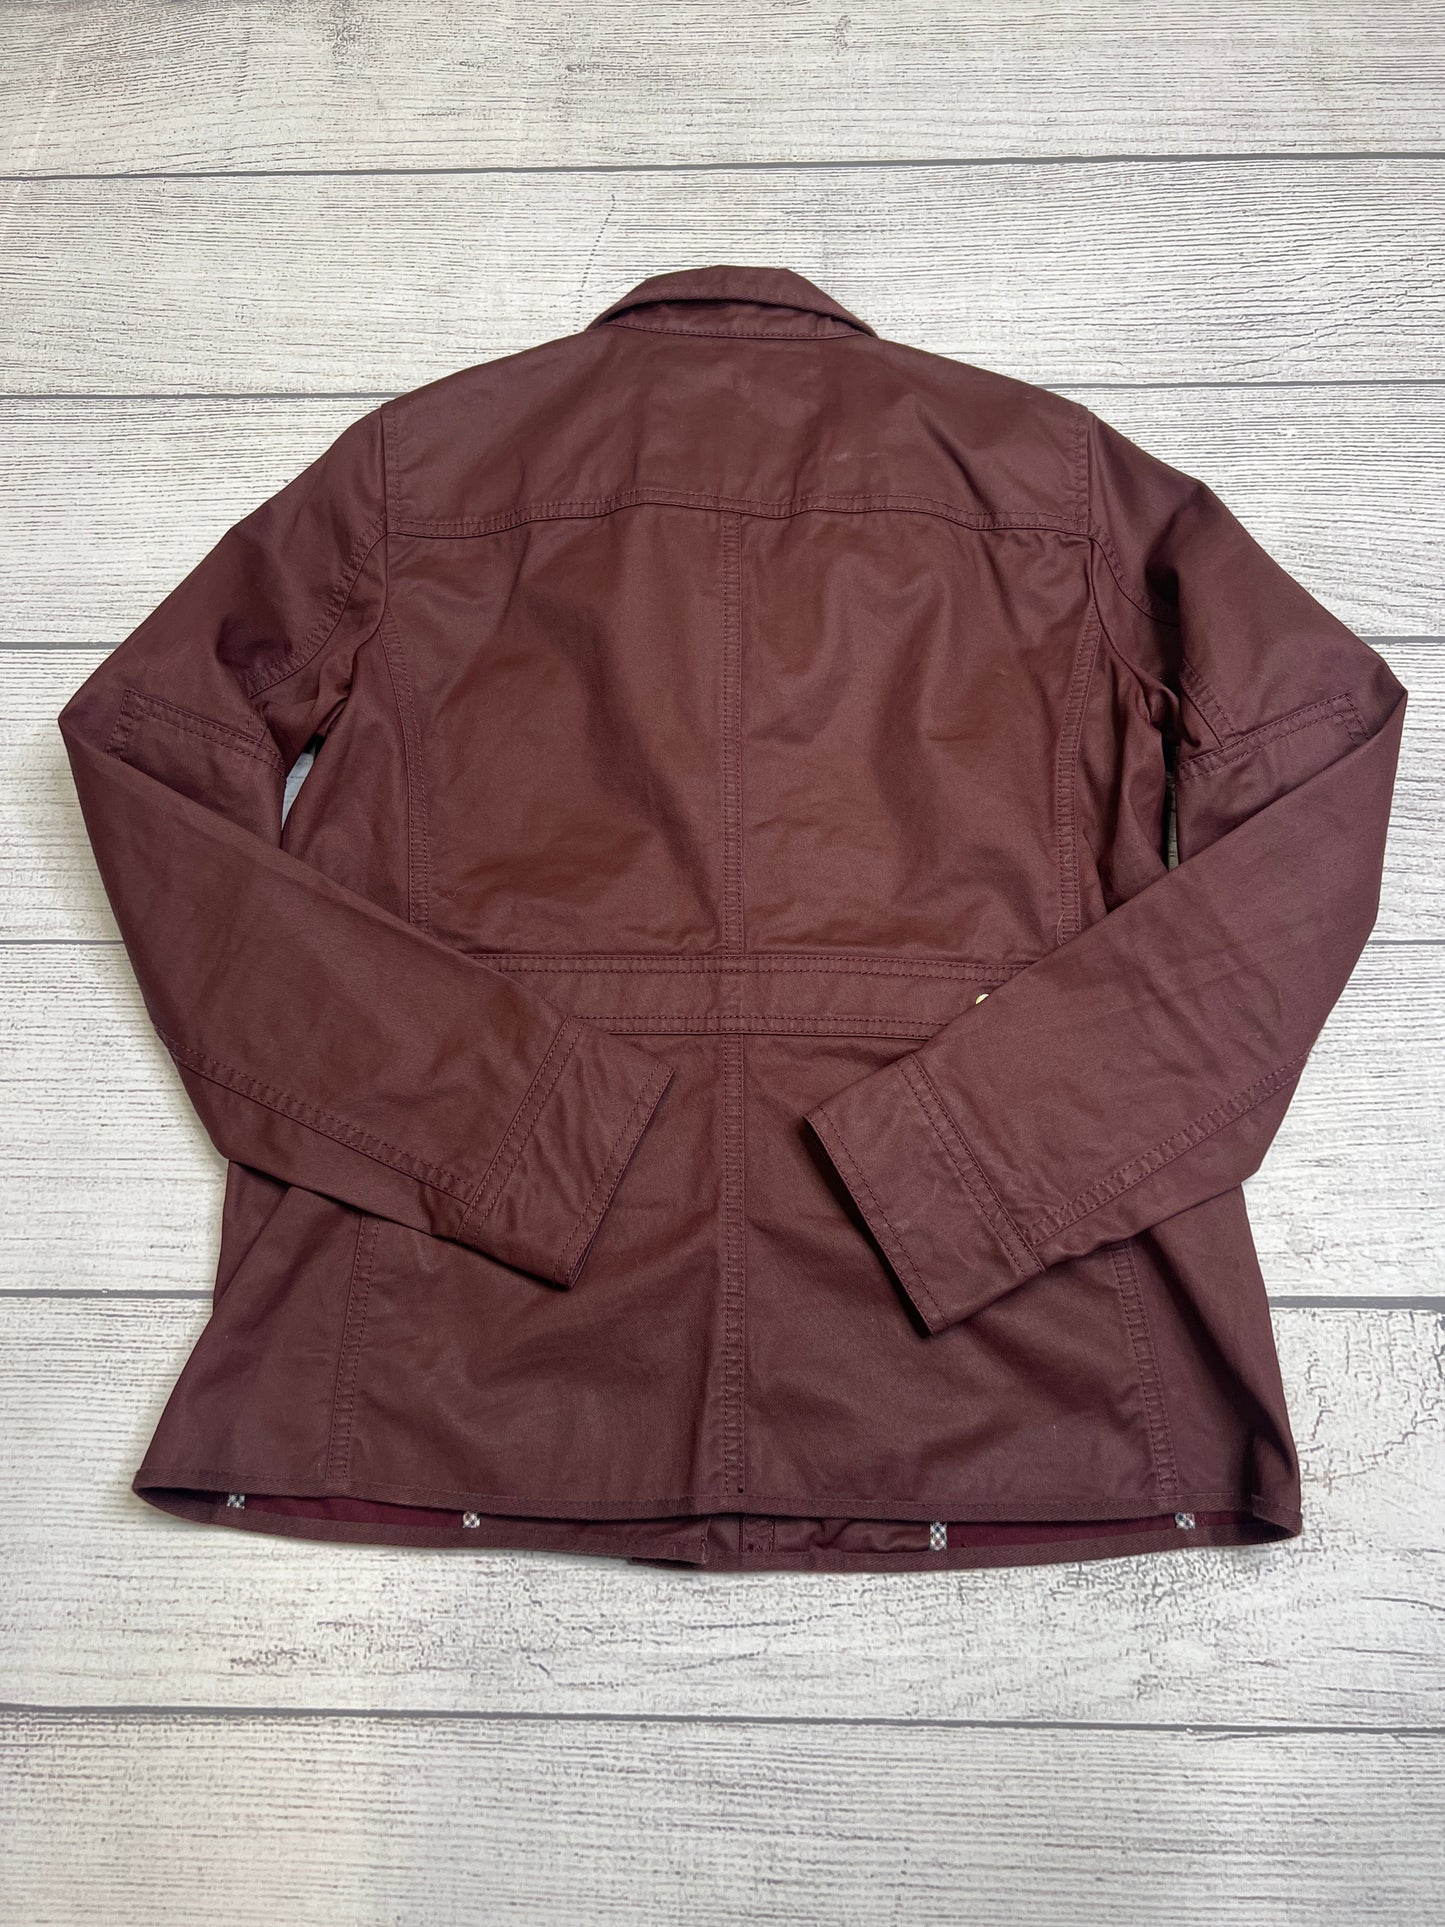 Jacket Moto By J Crew  Size: S